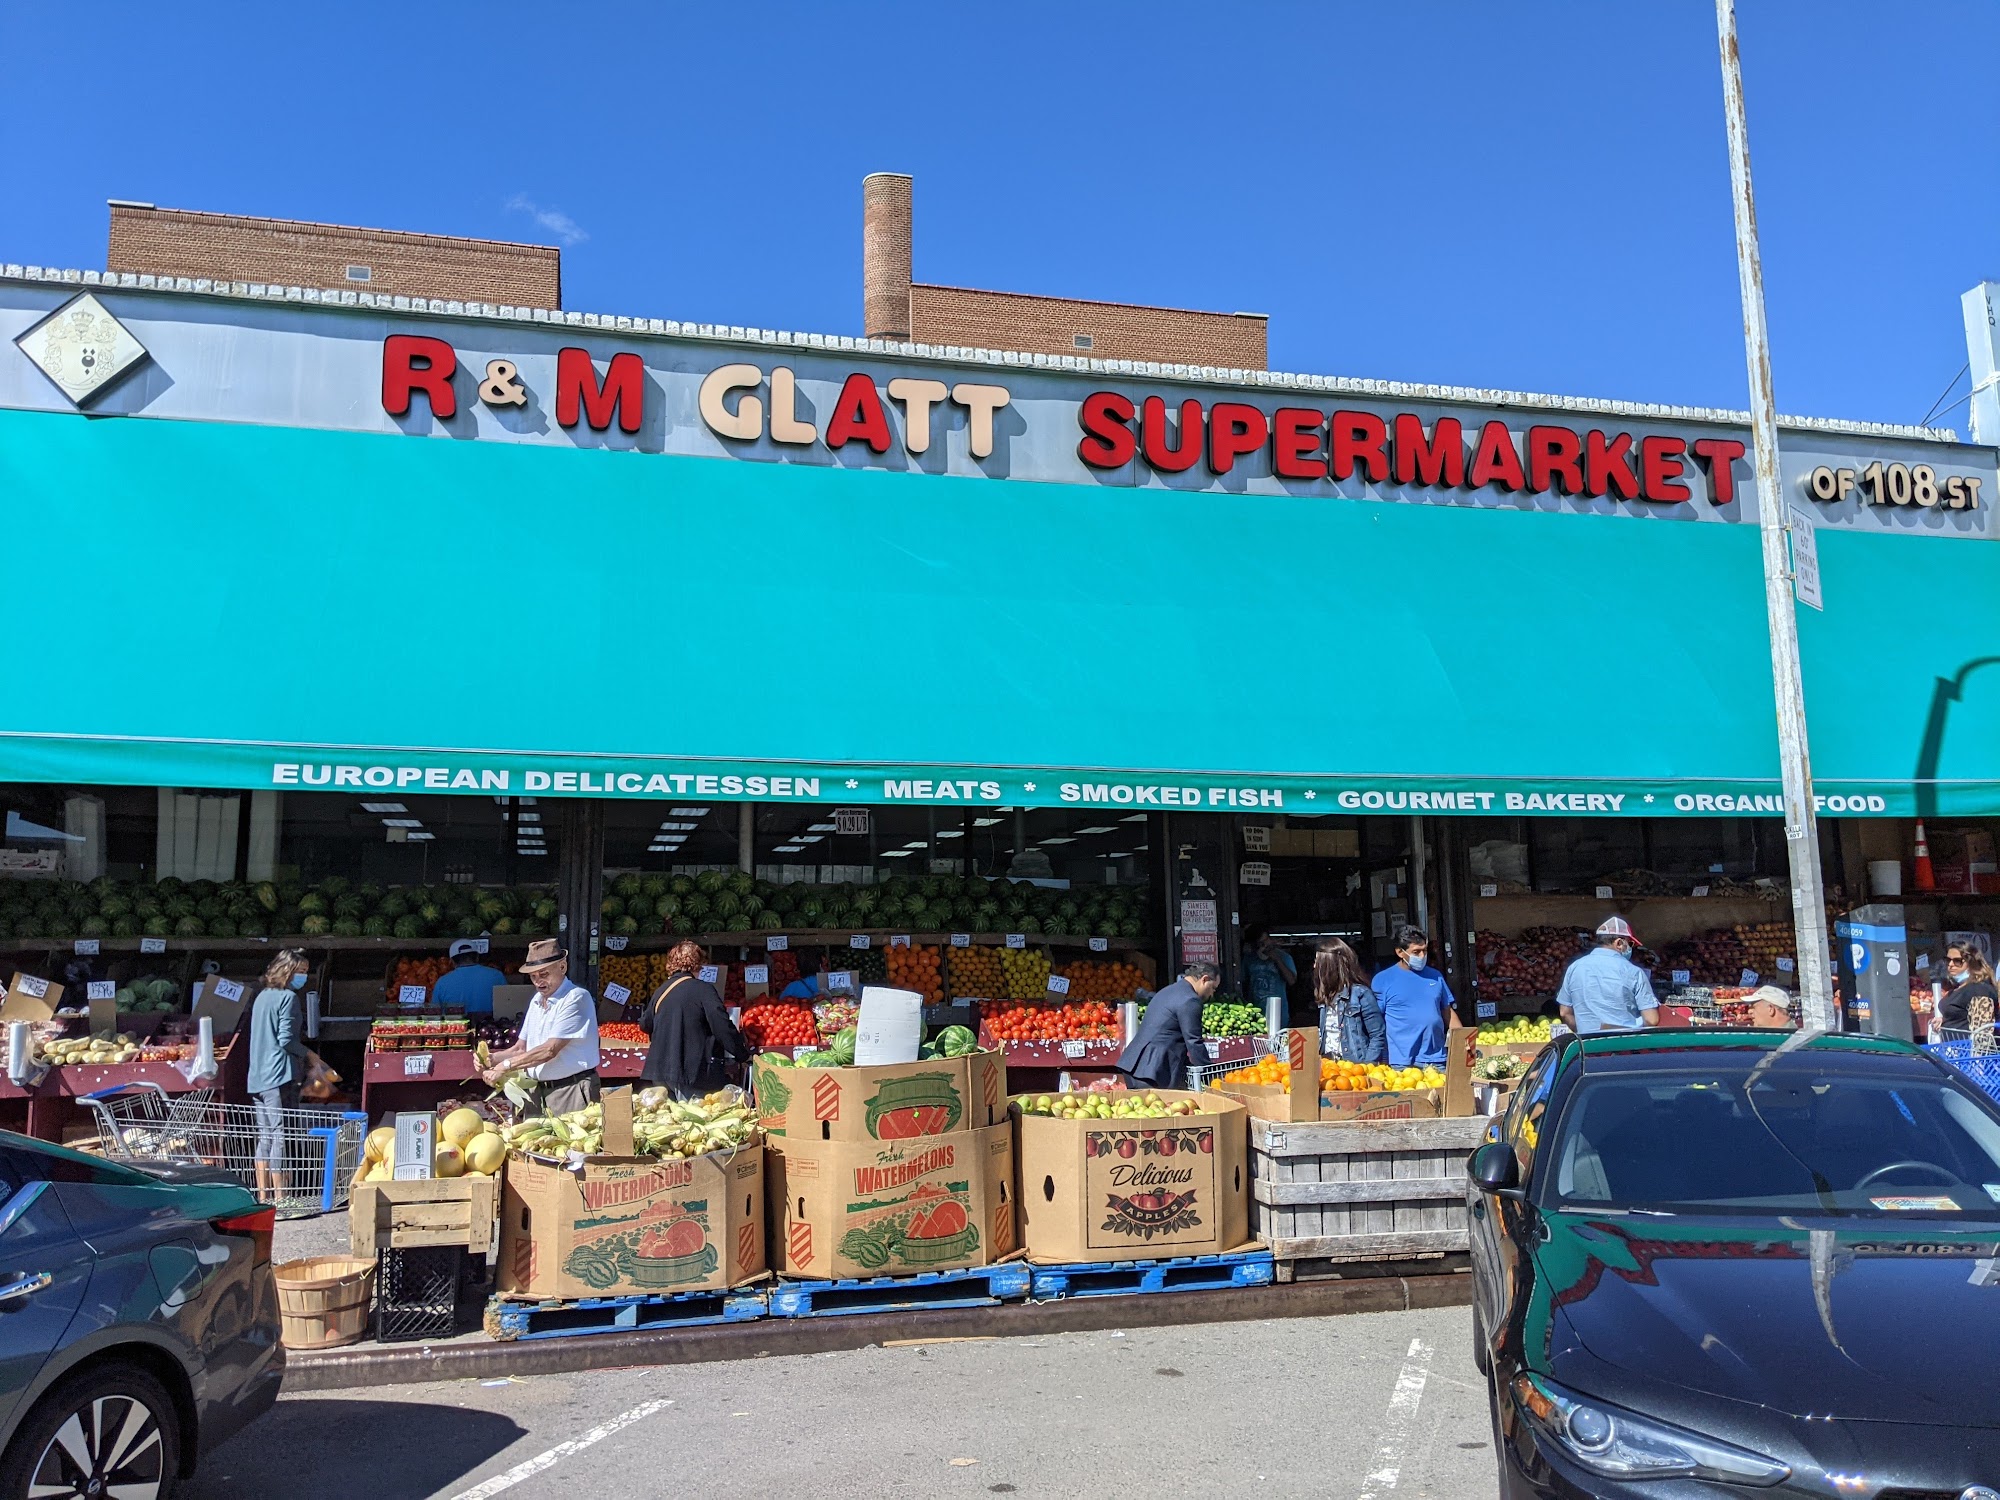 R and M glatt Supermarkets